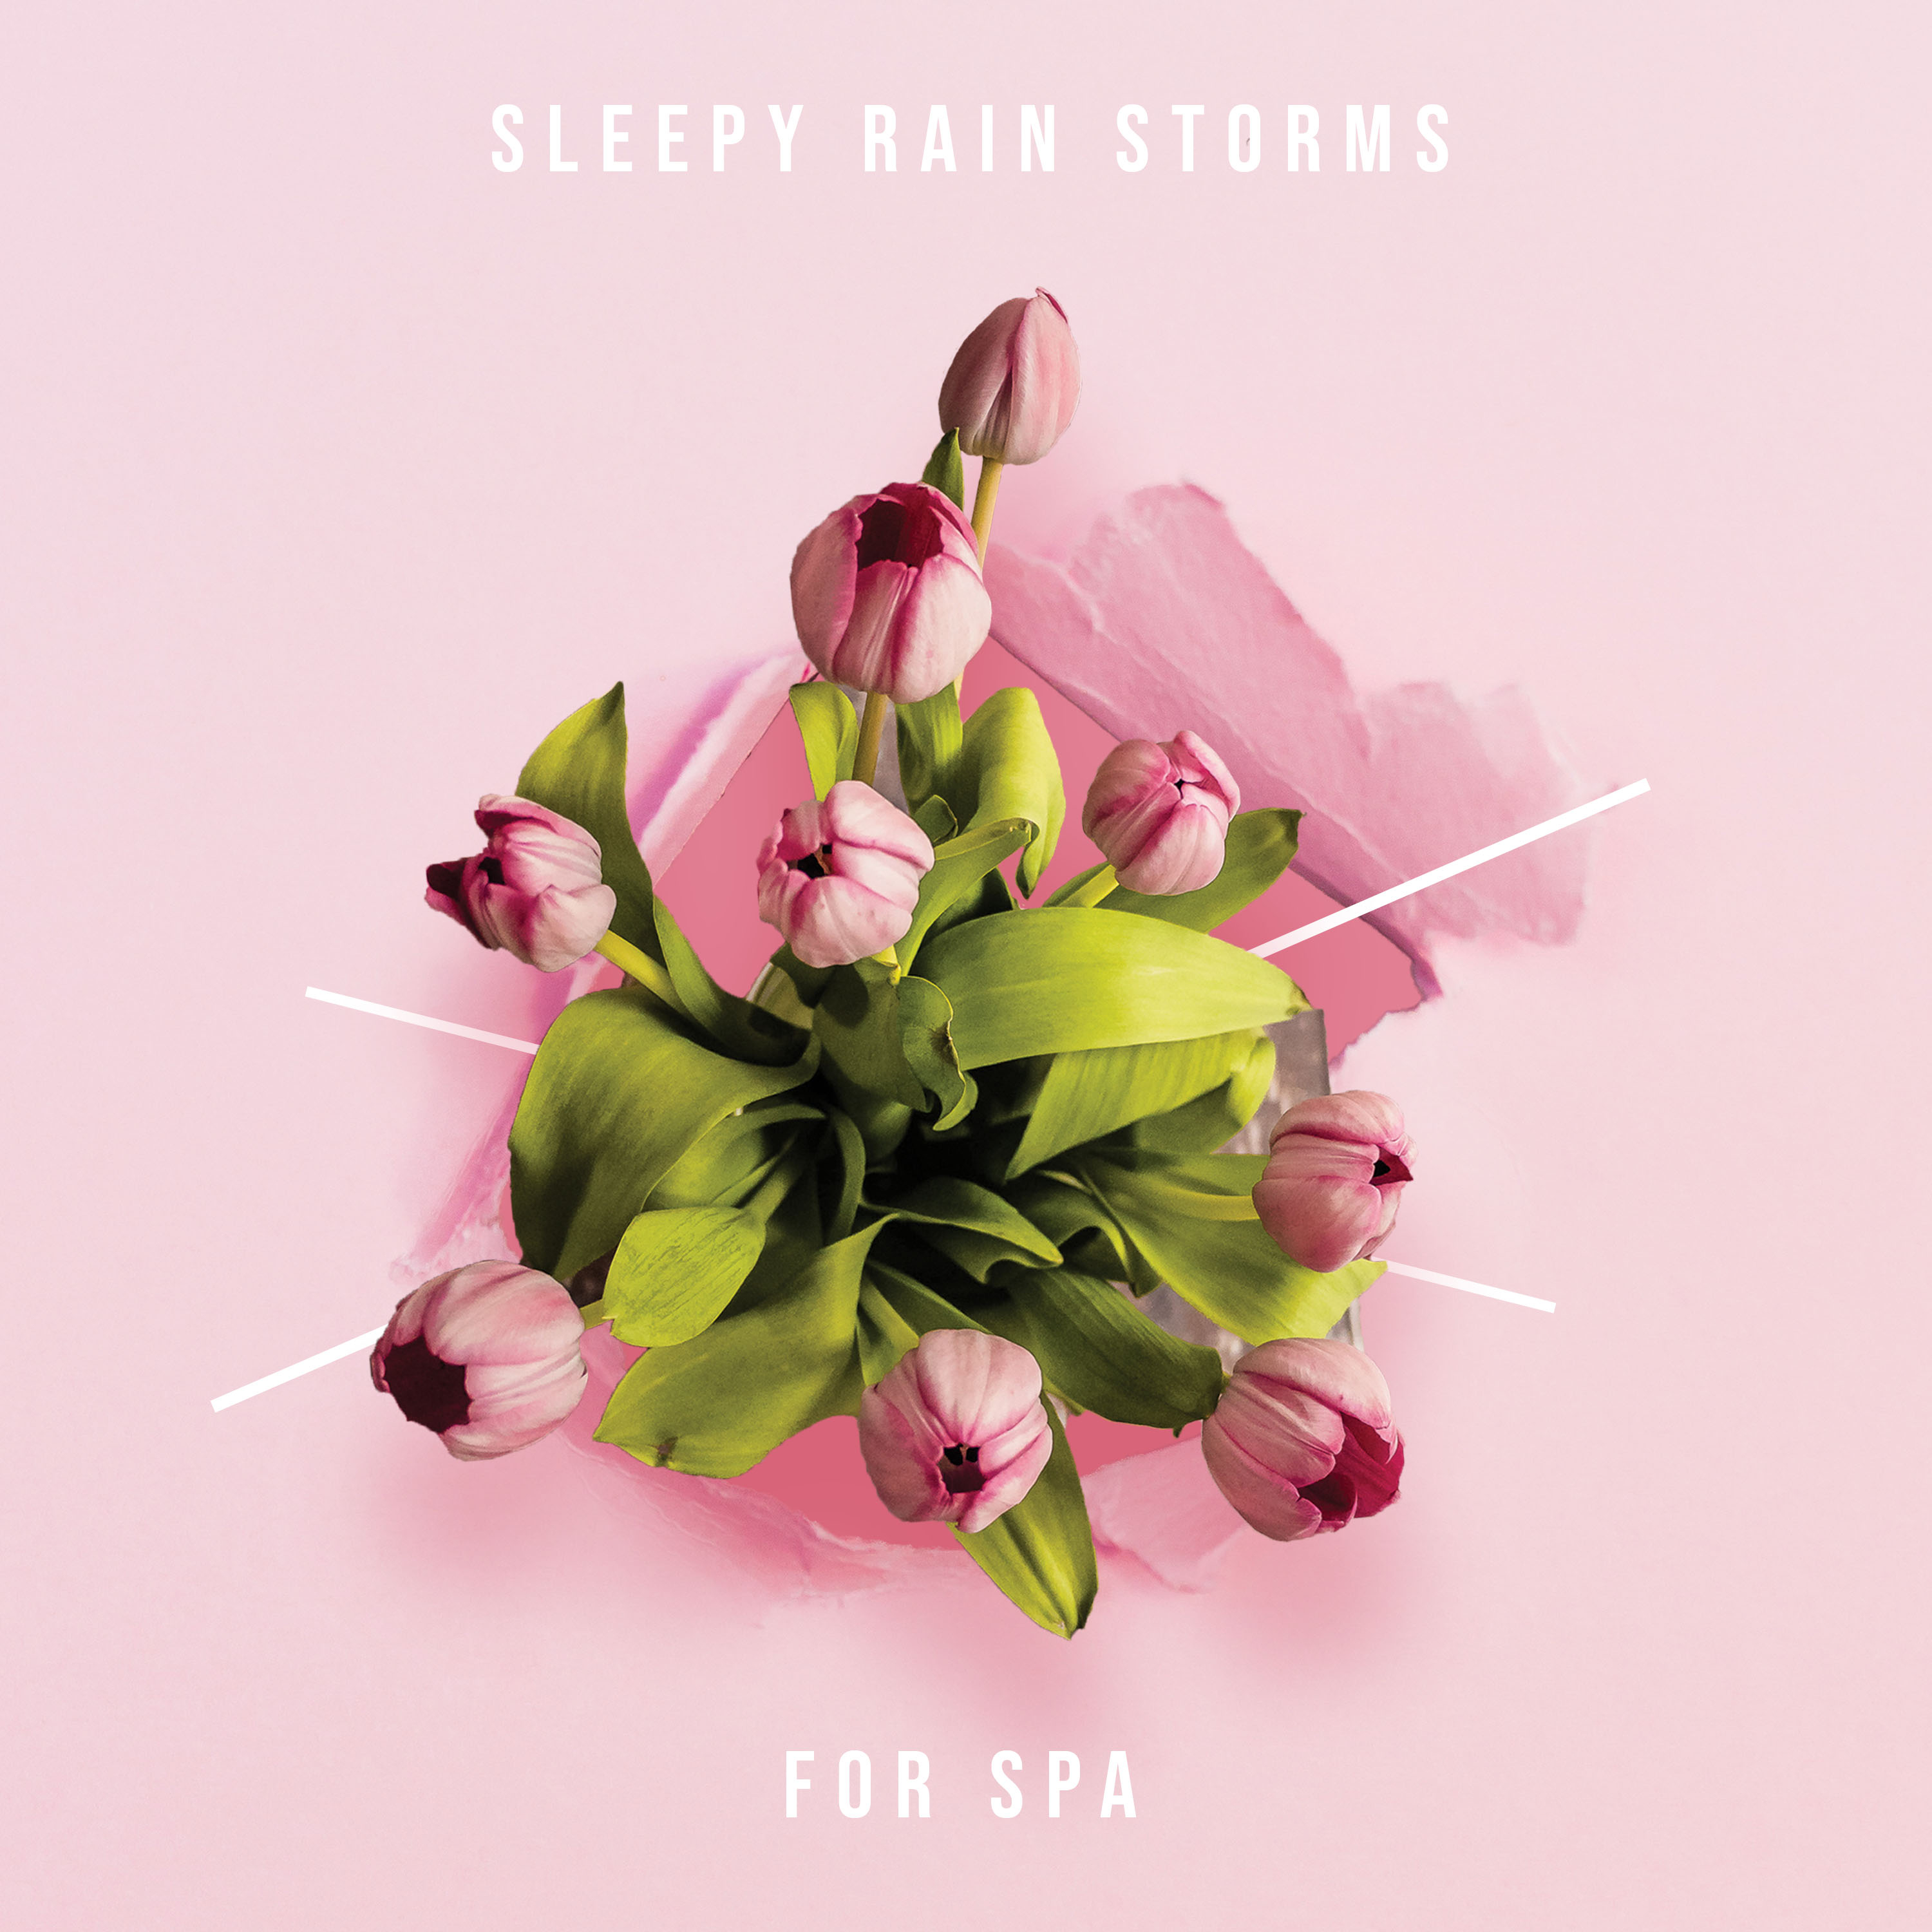 13 Sleepy Rain Storms for Spa